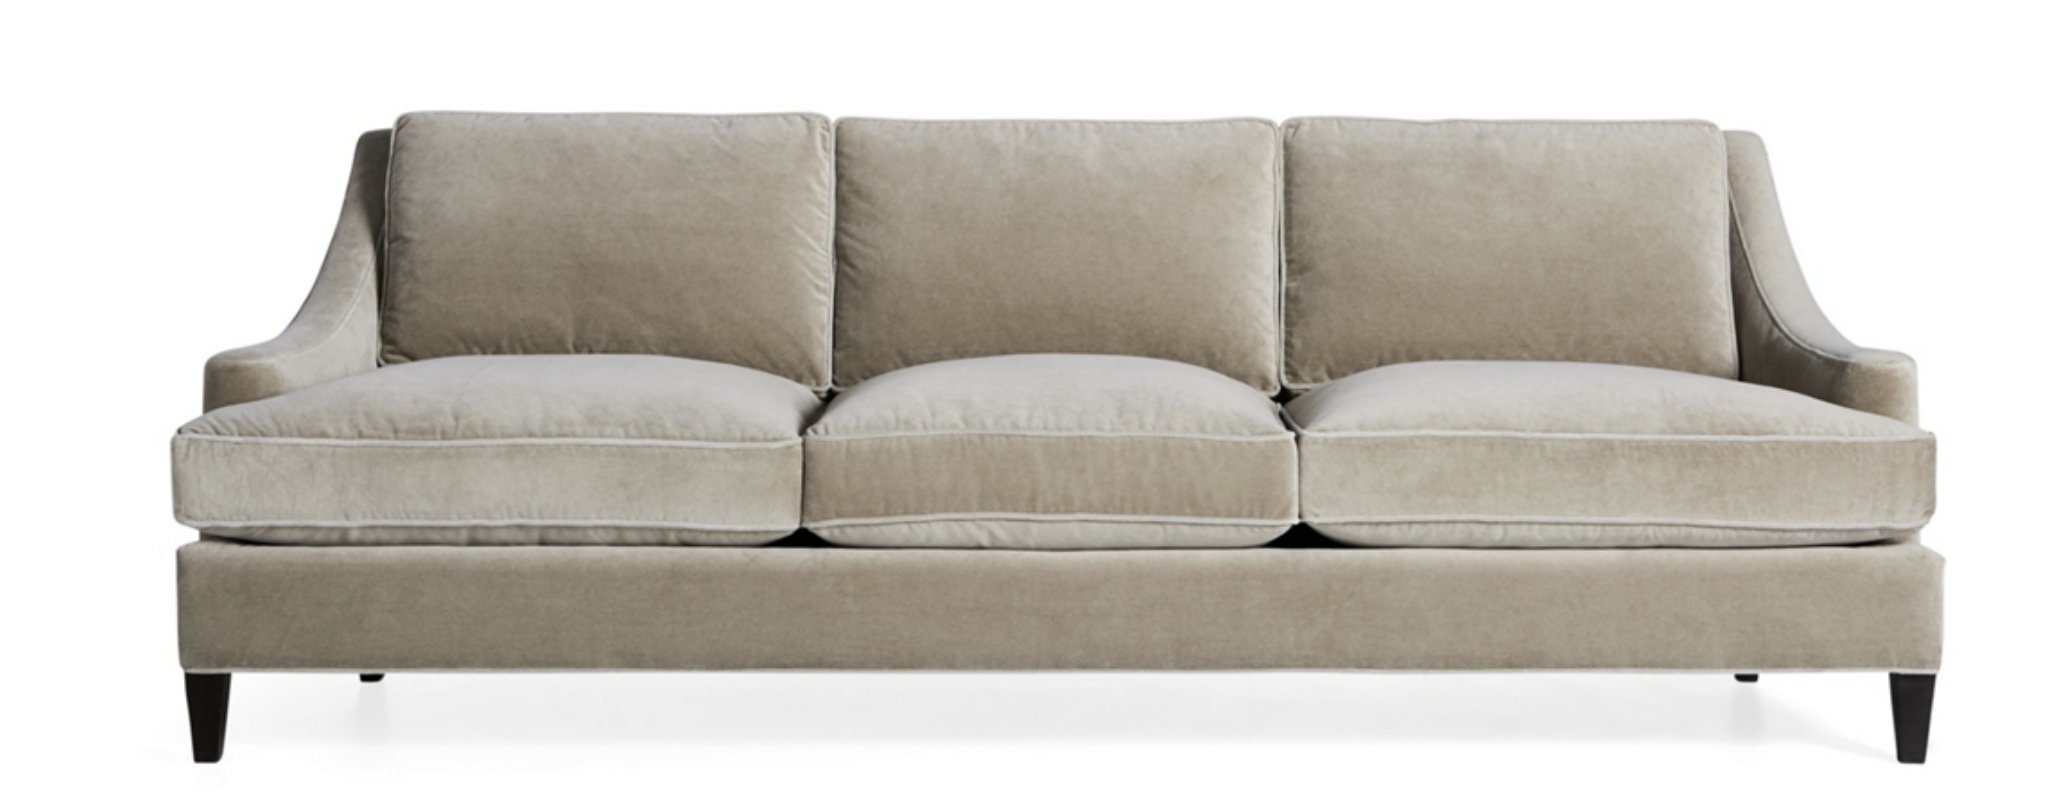 roxy sofa - Image 0